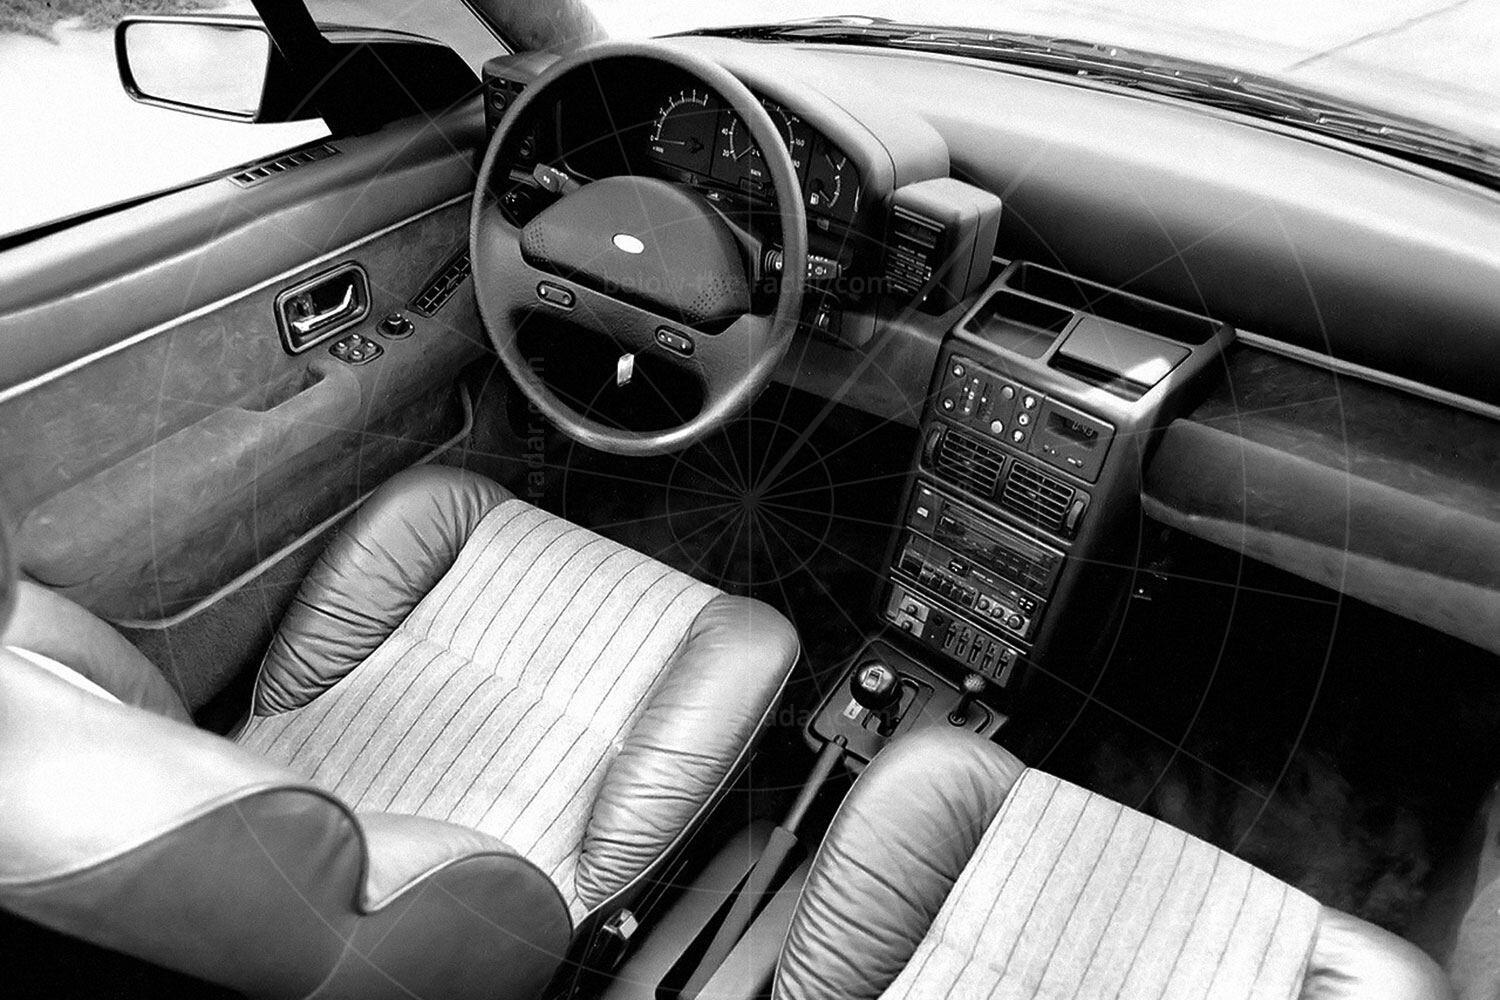 Ford Eltec interior Pic: Ford | Ford Eltec interior